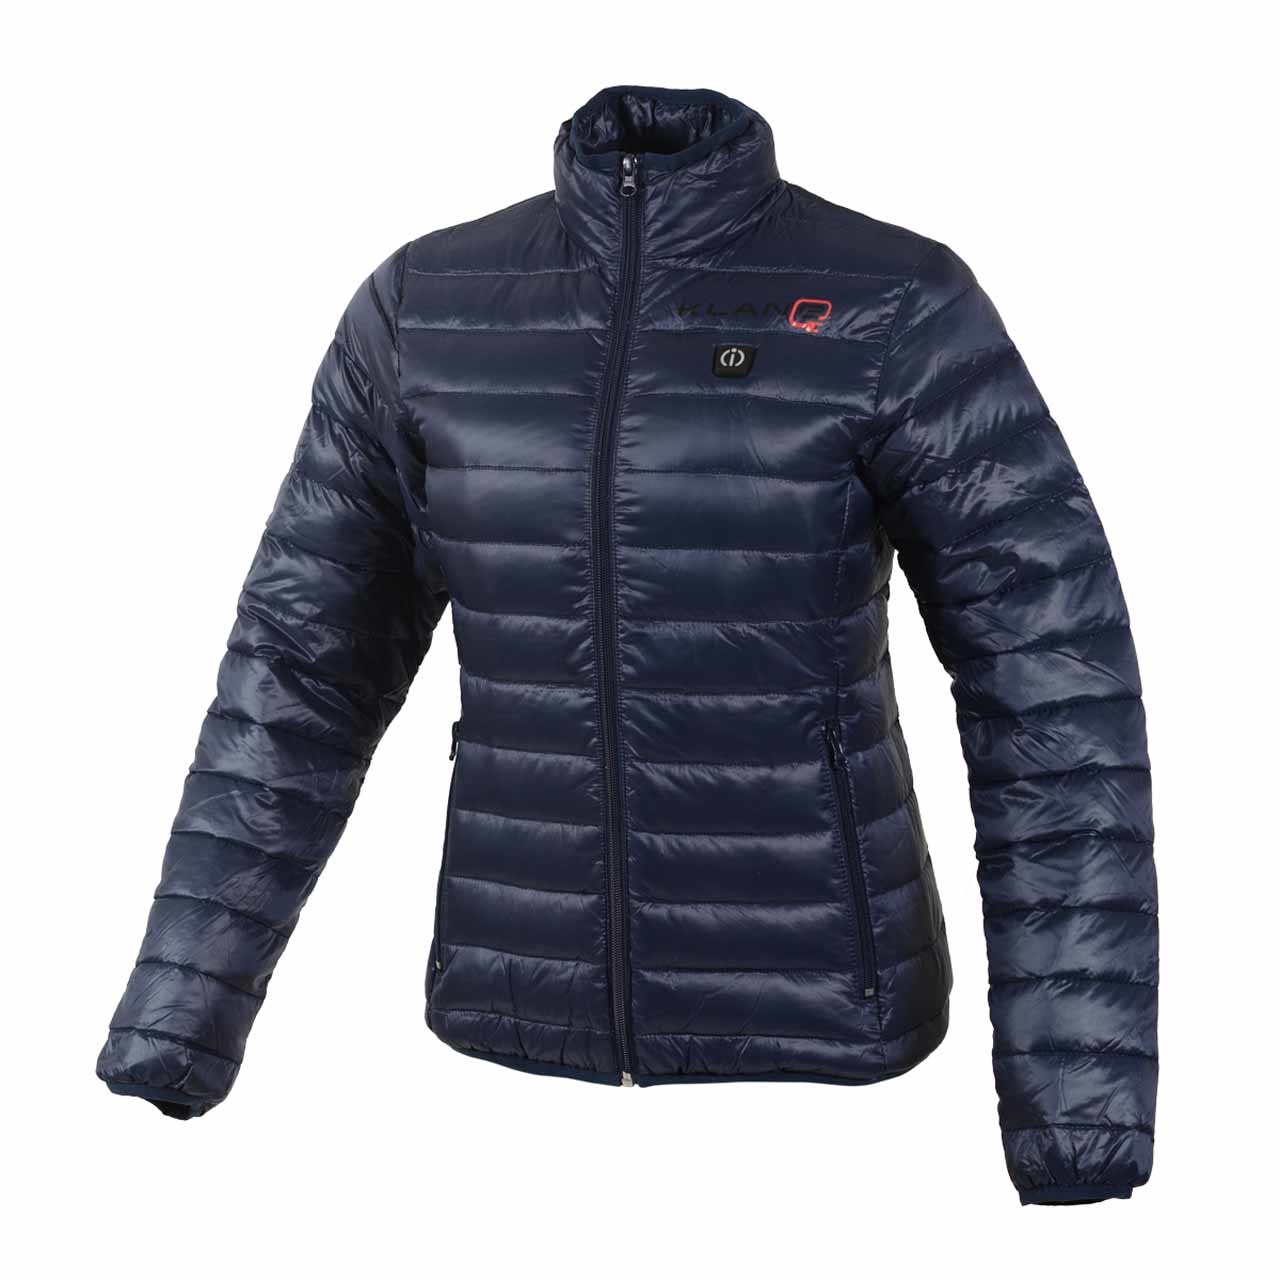 KLAN - Jacket down - Heated jacket